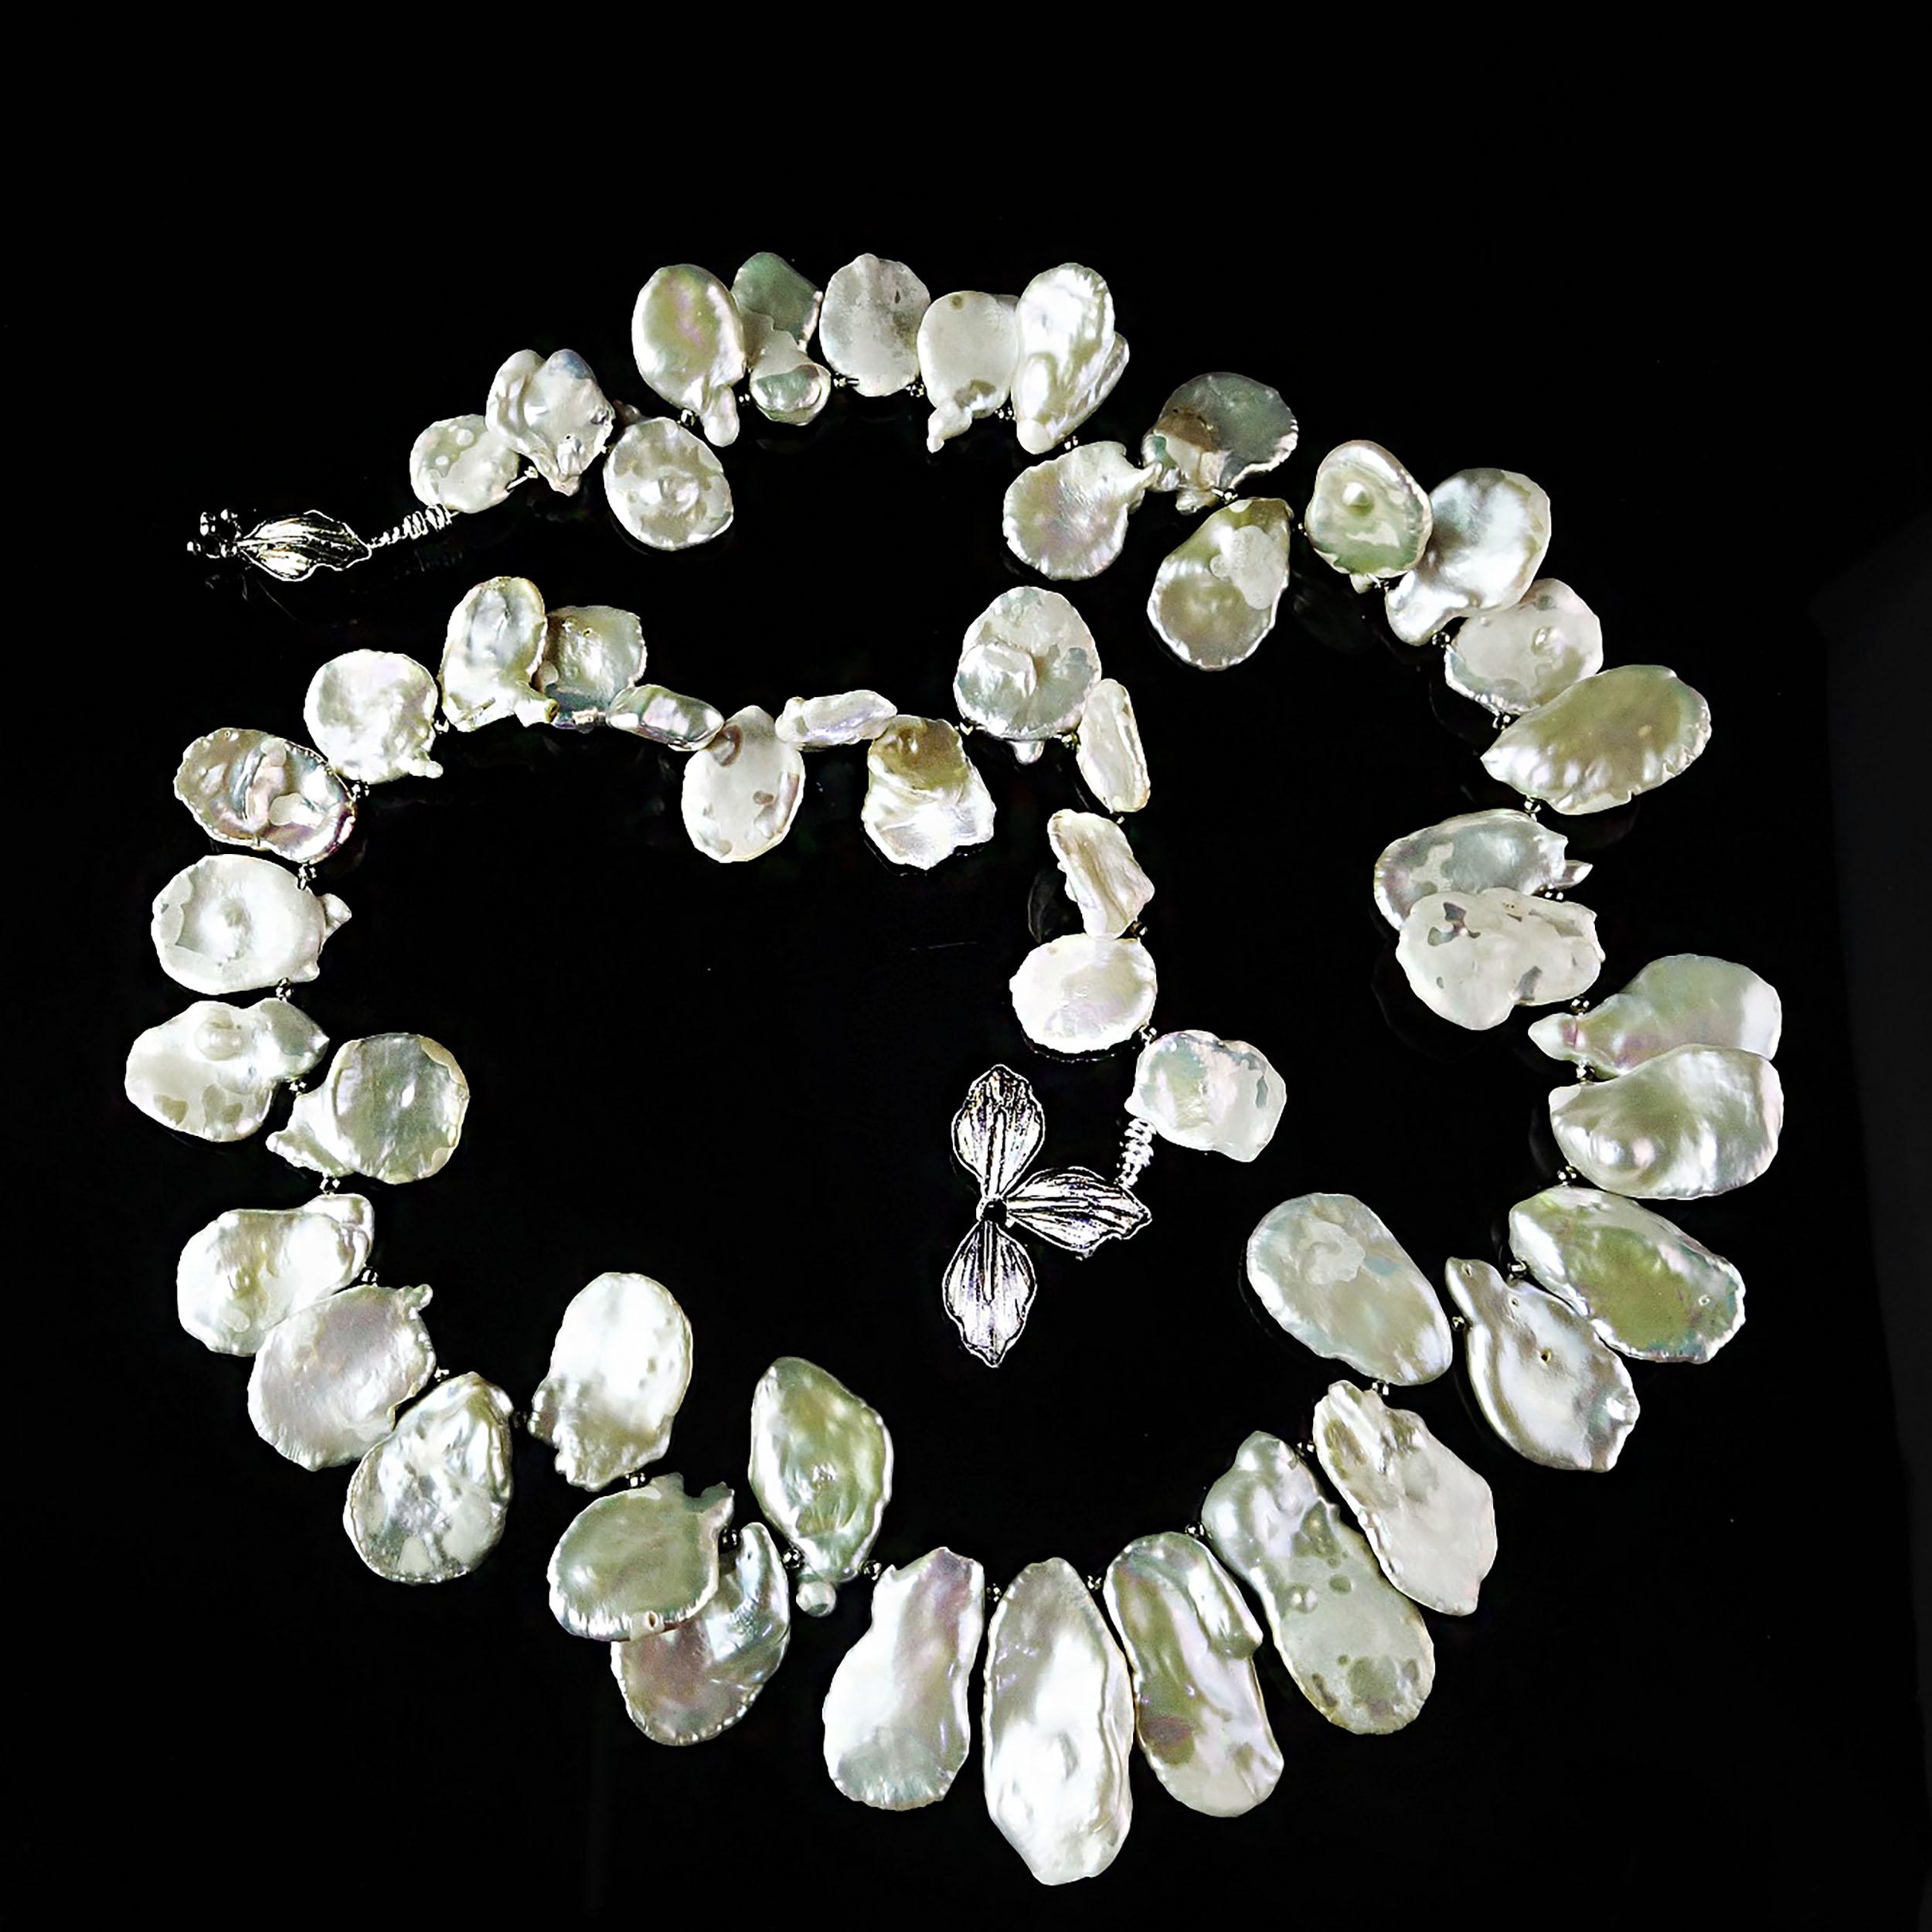 AJD Matinee Long collier de perles Keshi blanches et iridescentes, pierre de naissance de juin 2